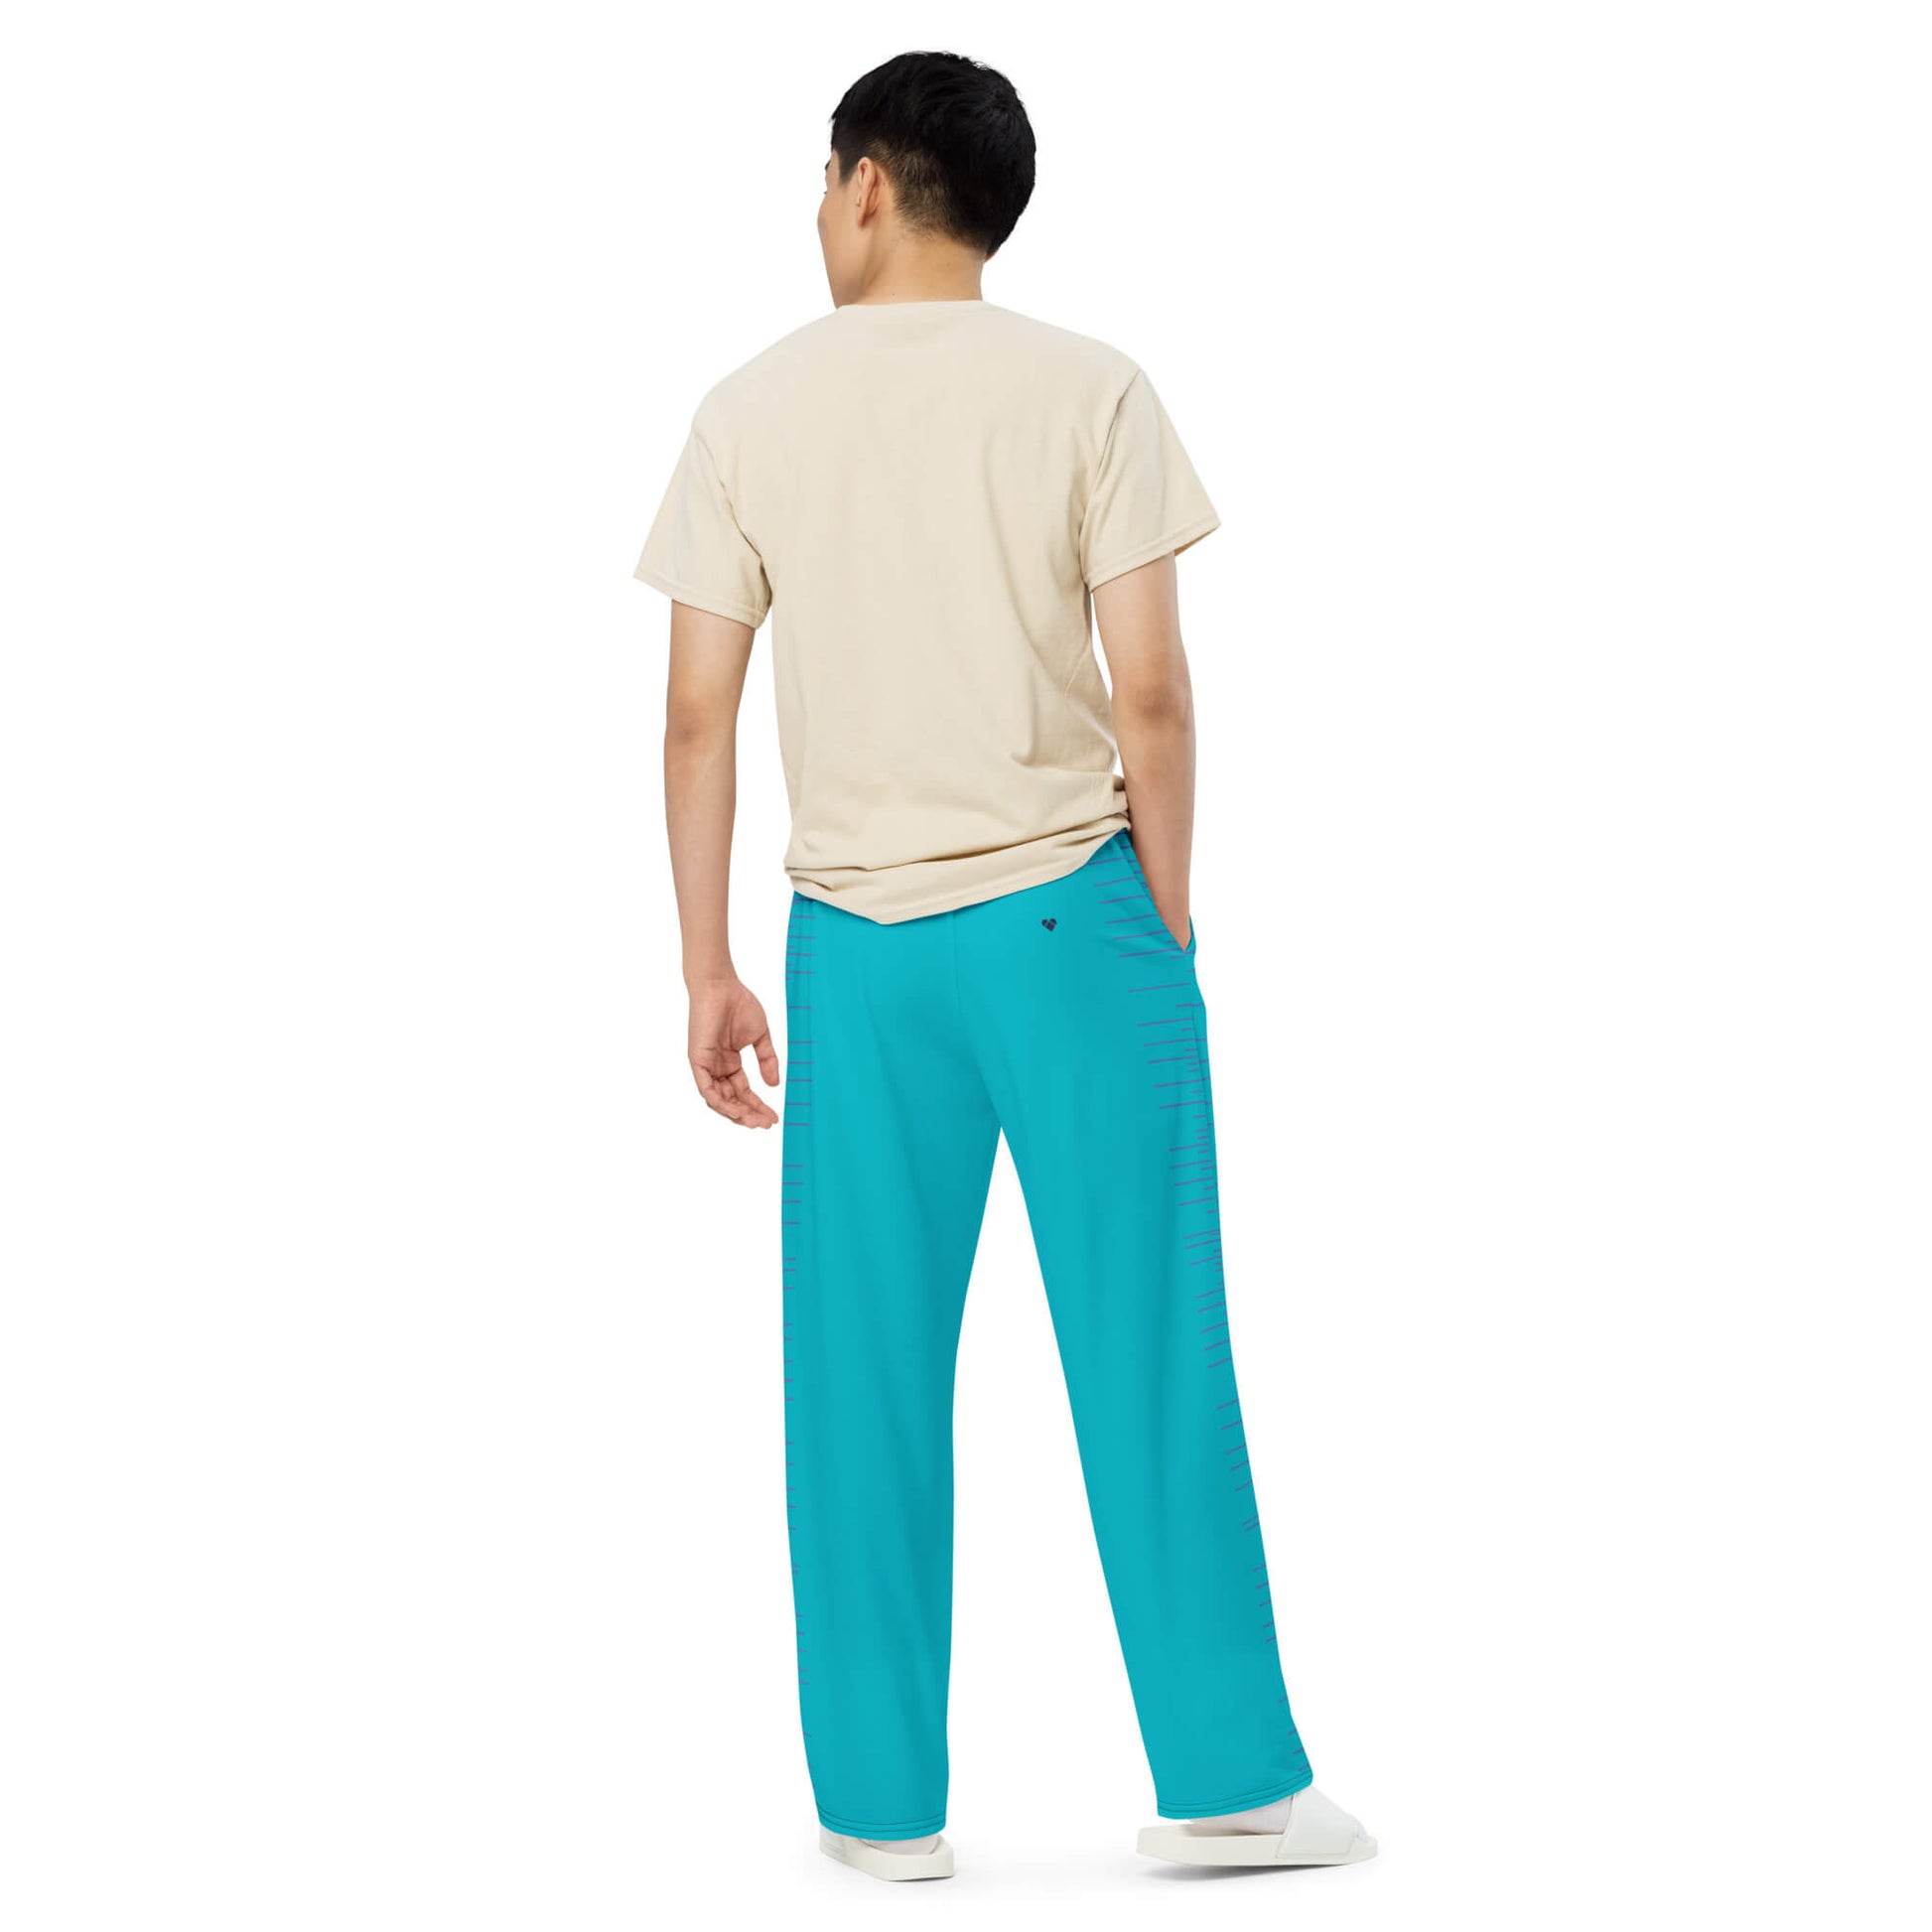 Turquoise Dual Pants